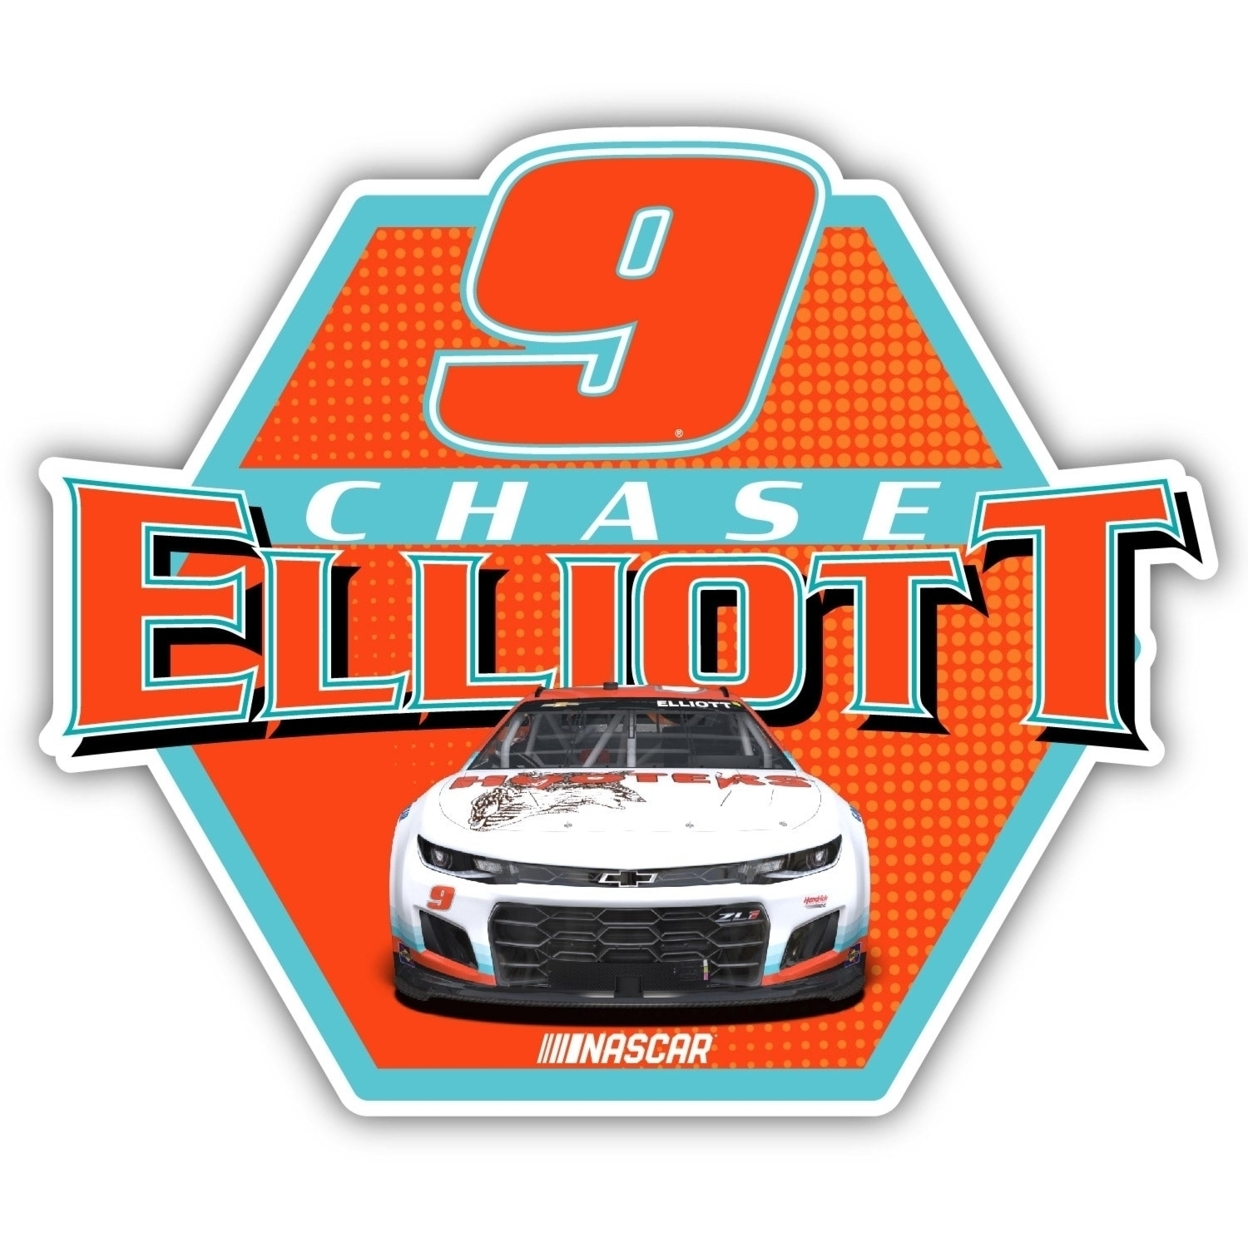 Chase Elliott Hooters #9 NASCAR Laser Cut Decal